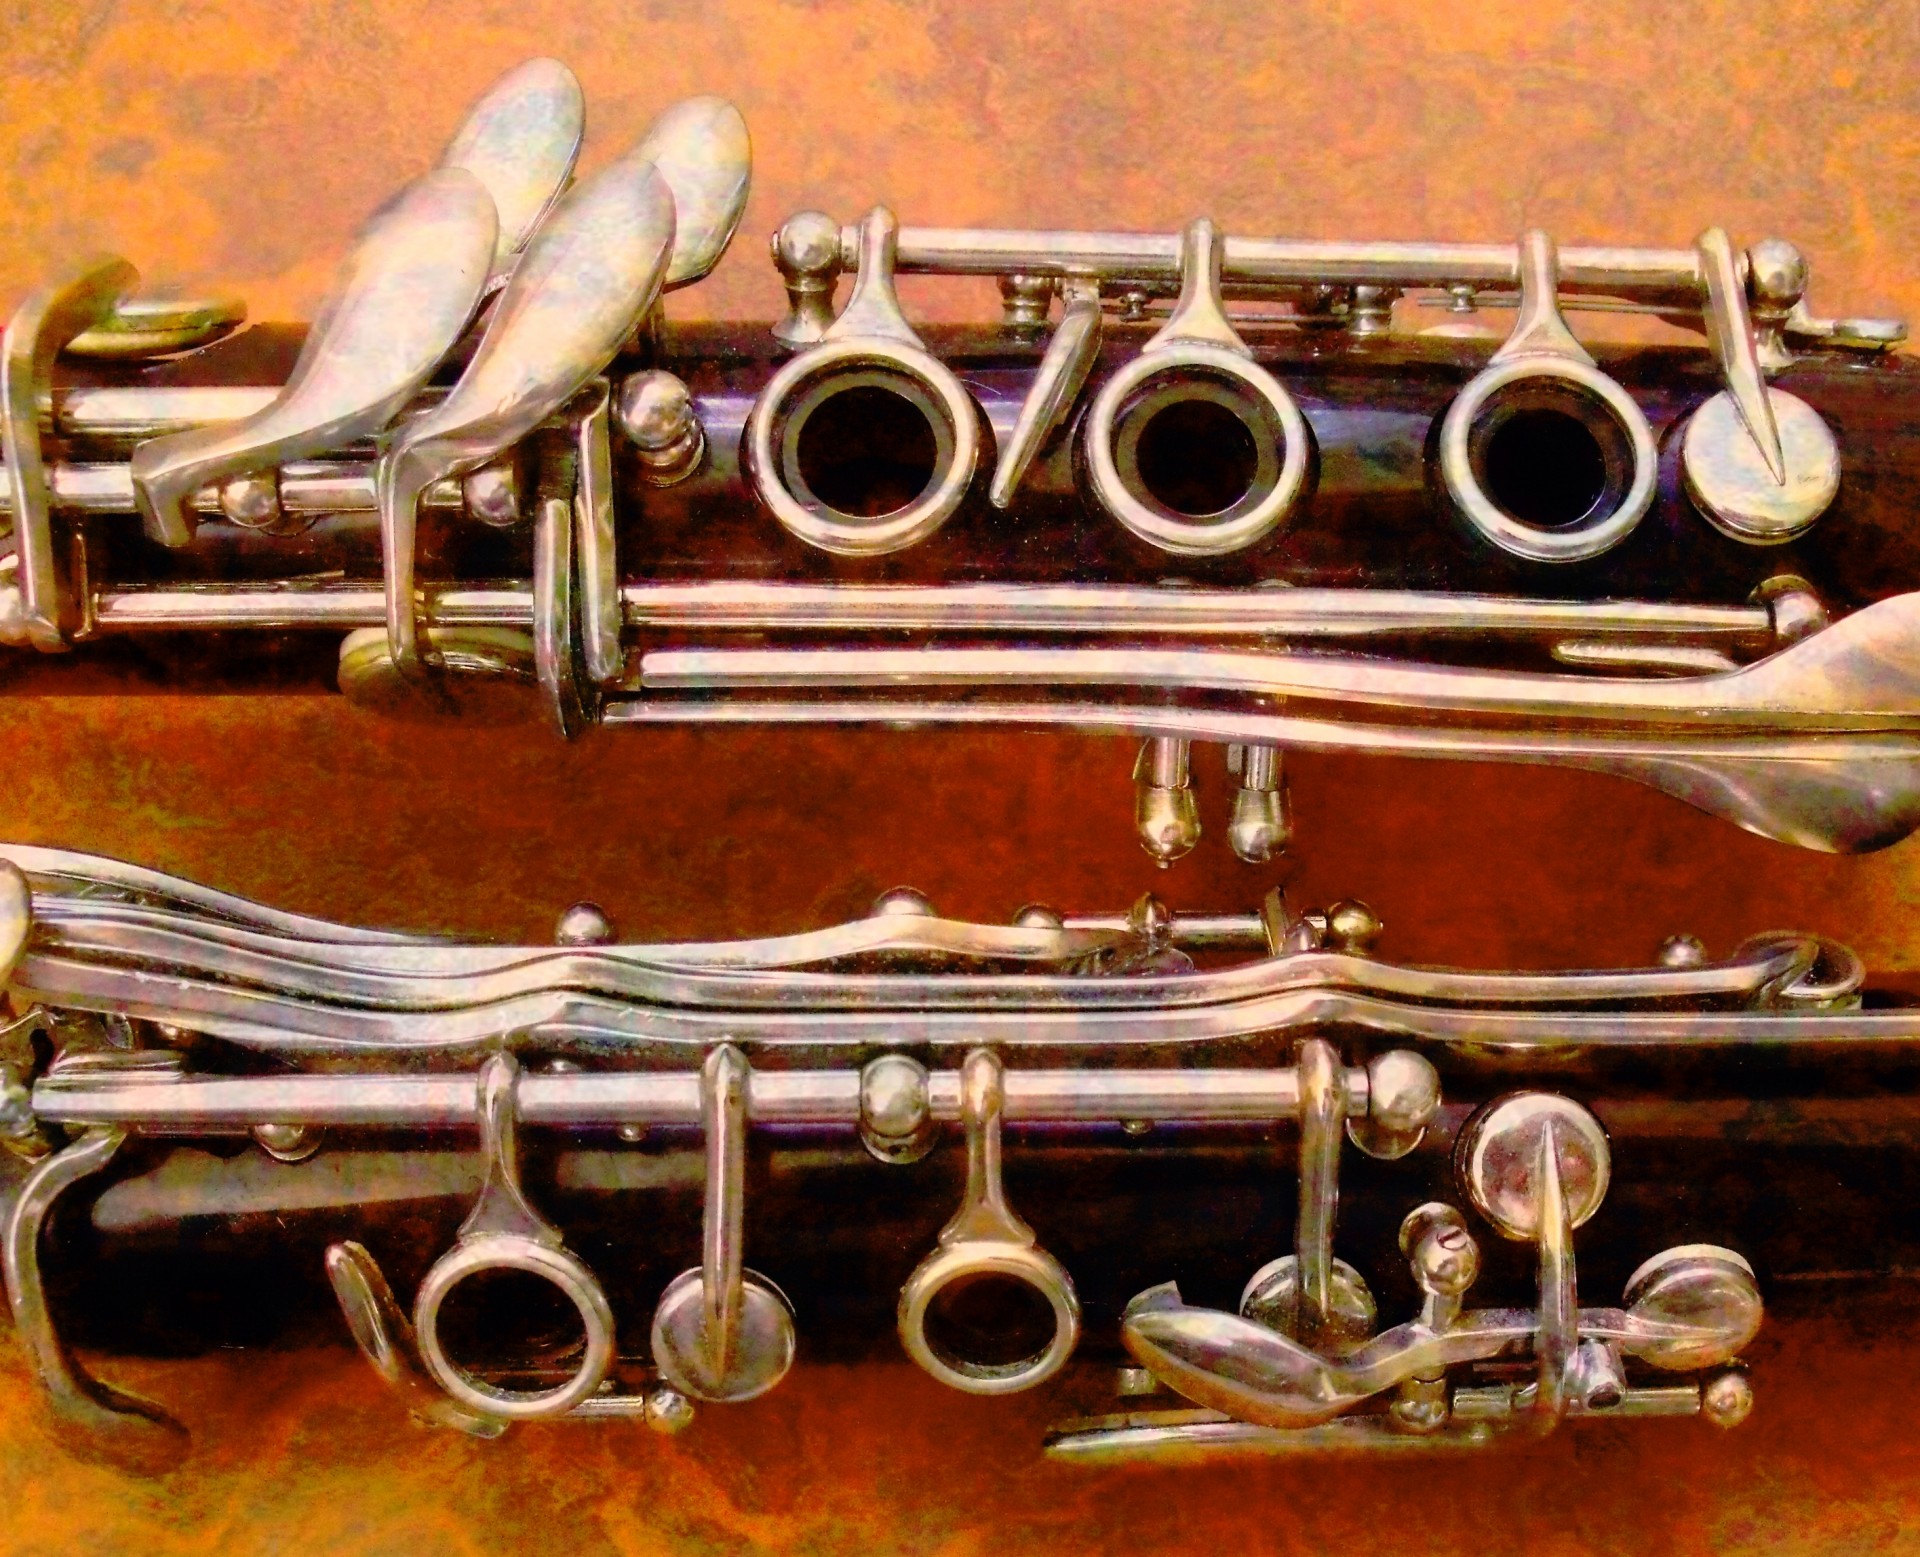 Clarinet close up